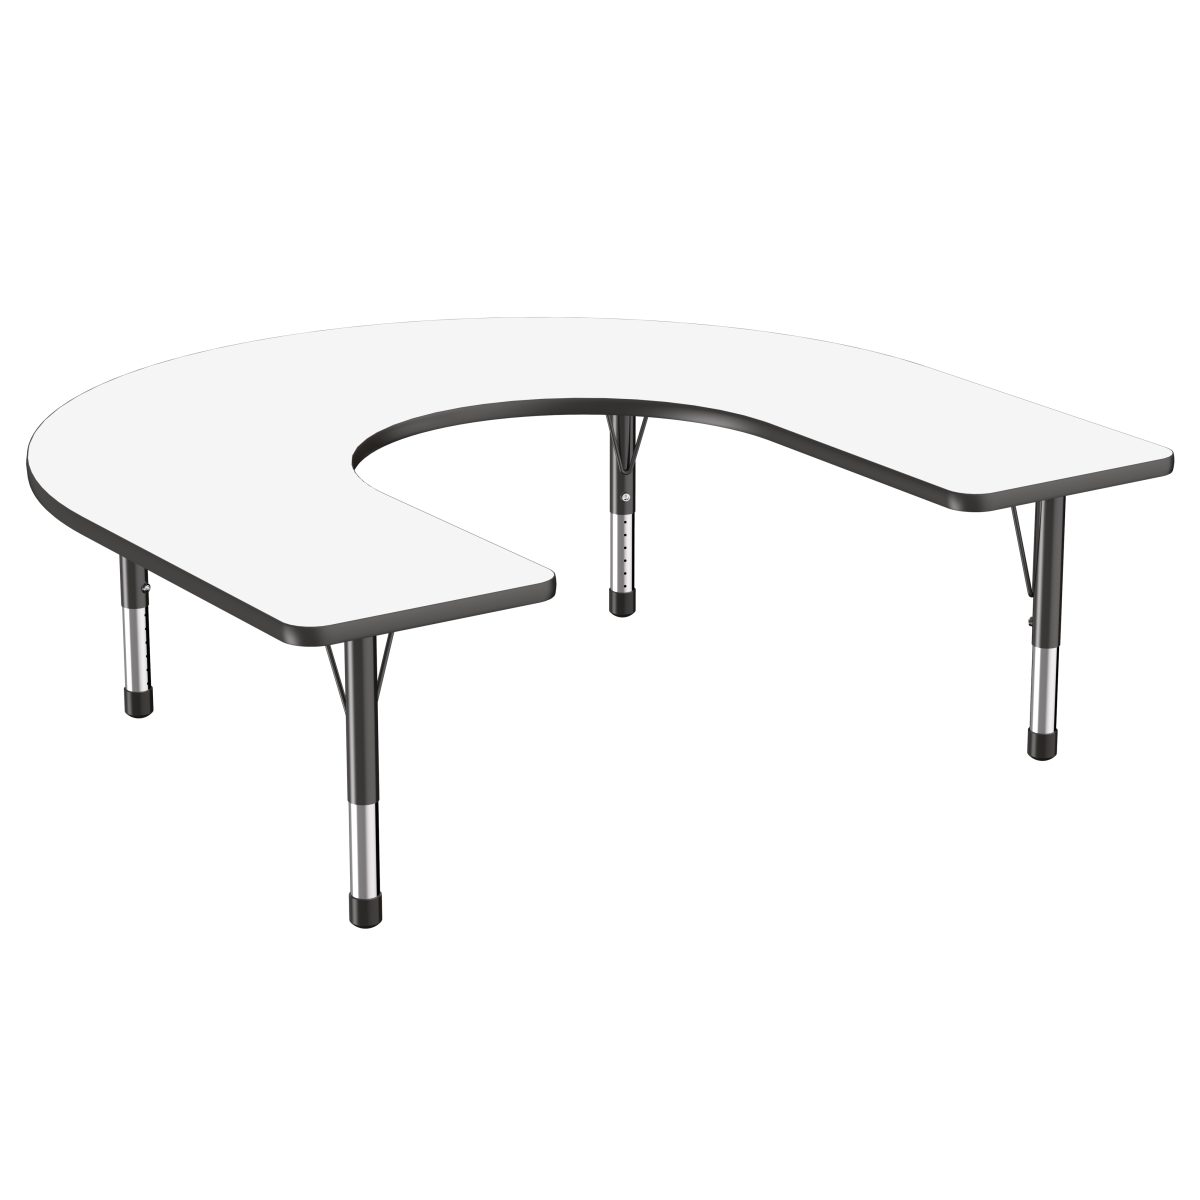 10247-debk 60 X 66 In. Horseshoe Dry-erase Adjustable Activity Table With Chunky Leg - Black